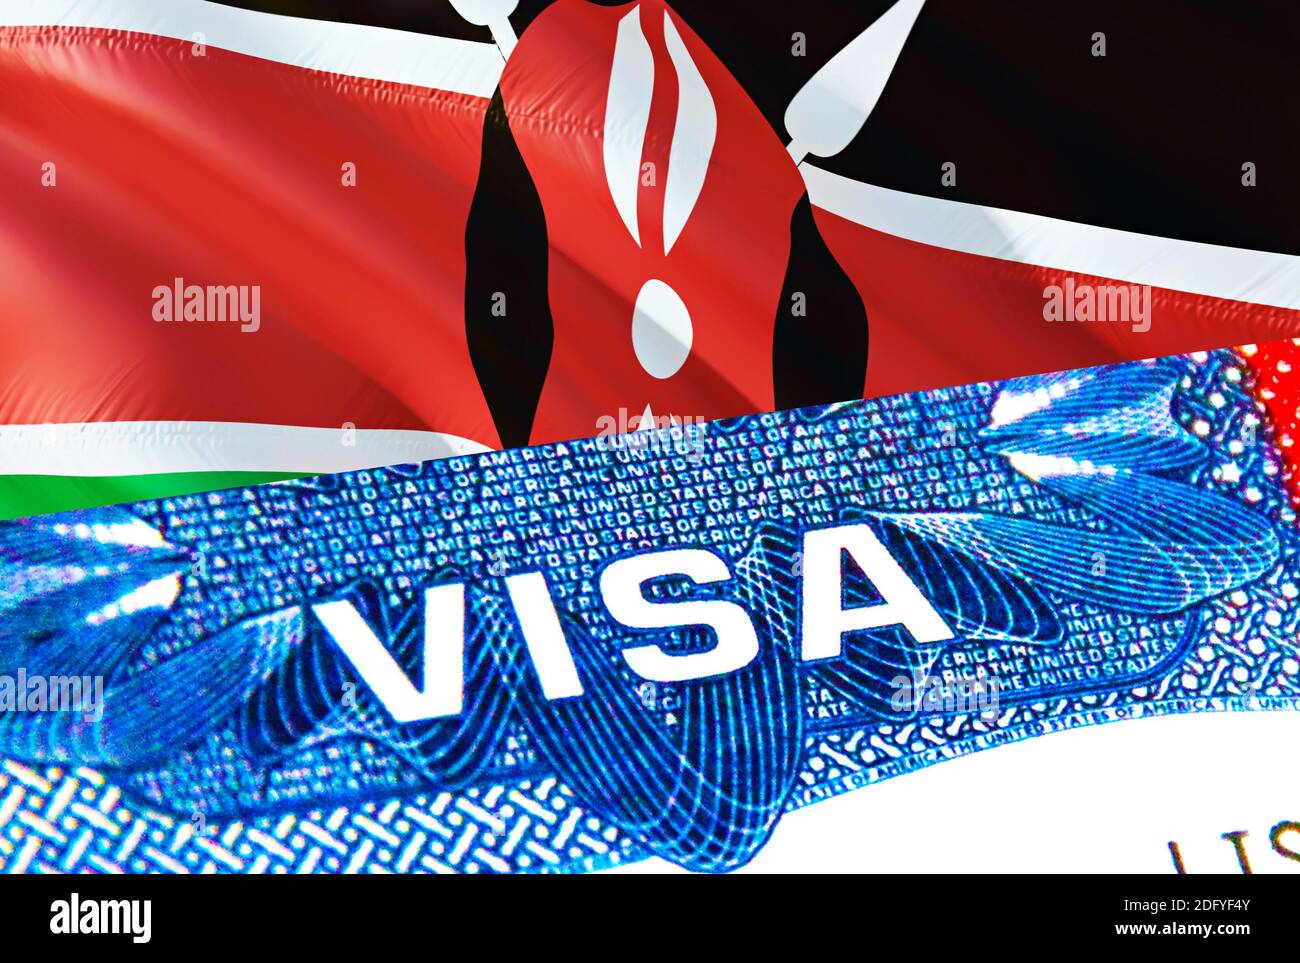 Kenya Visa. Travel to Kenya focusing on word VISA, 3D rendering. Kenya immigrate concept with visa in passport. Kenya tourism entrance in passport. Vi Stock Photo